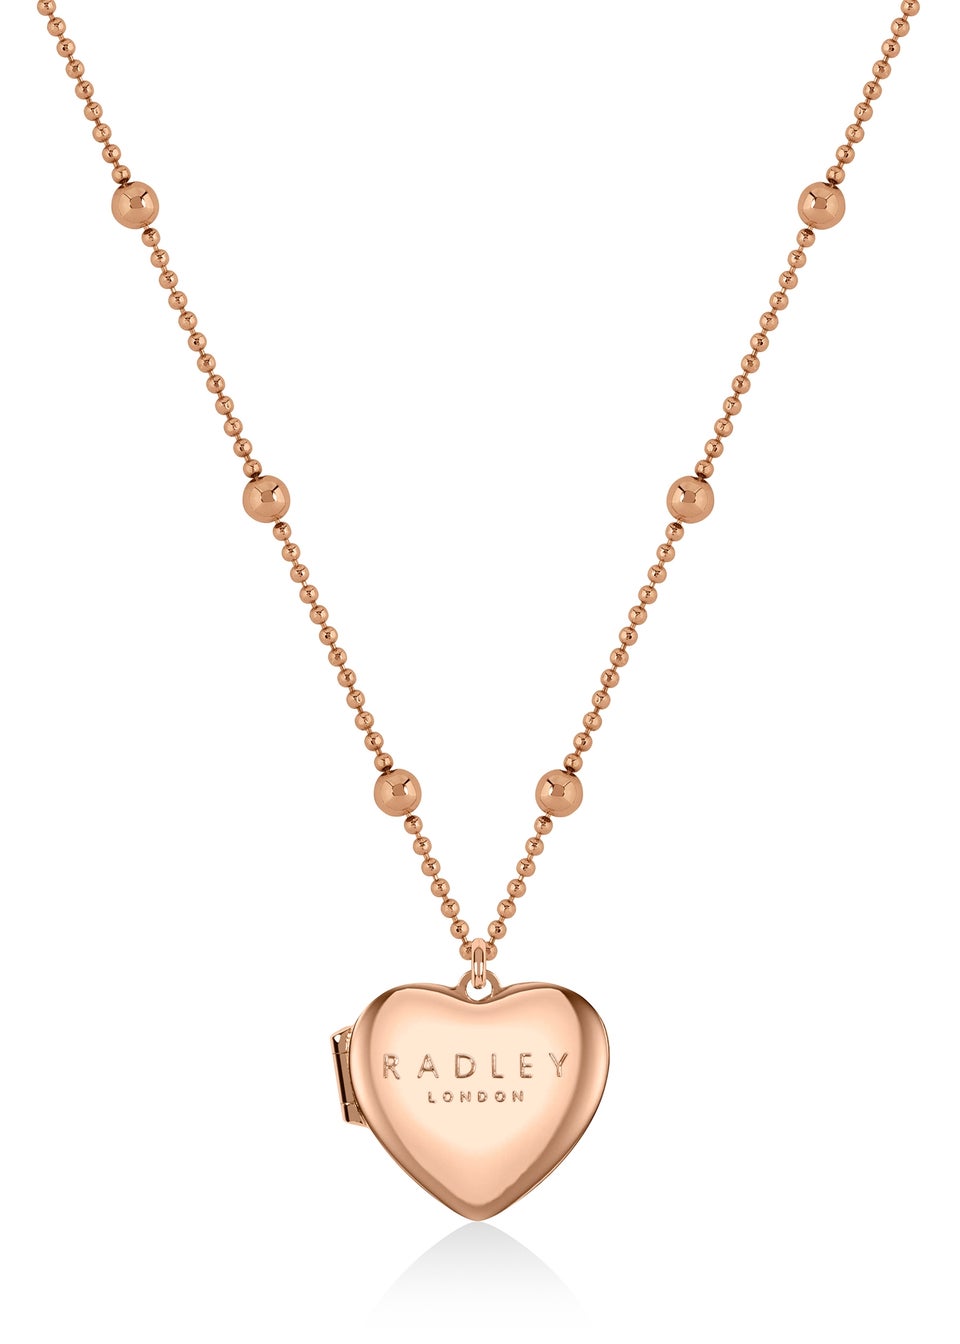 Radley London 18ct Rose Gold Heart Shaped Locket Necklace